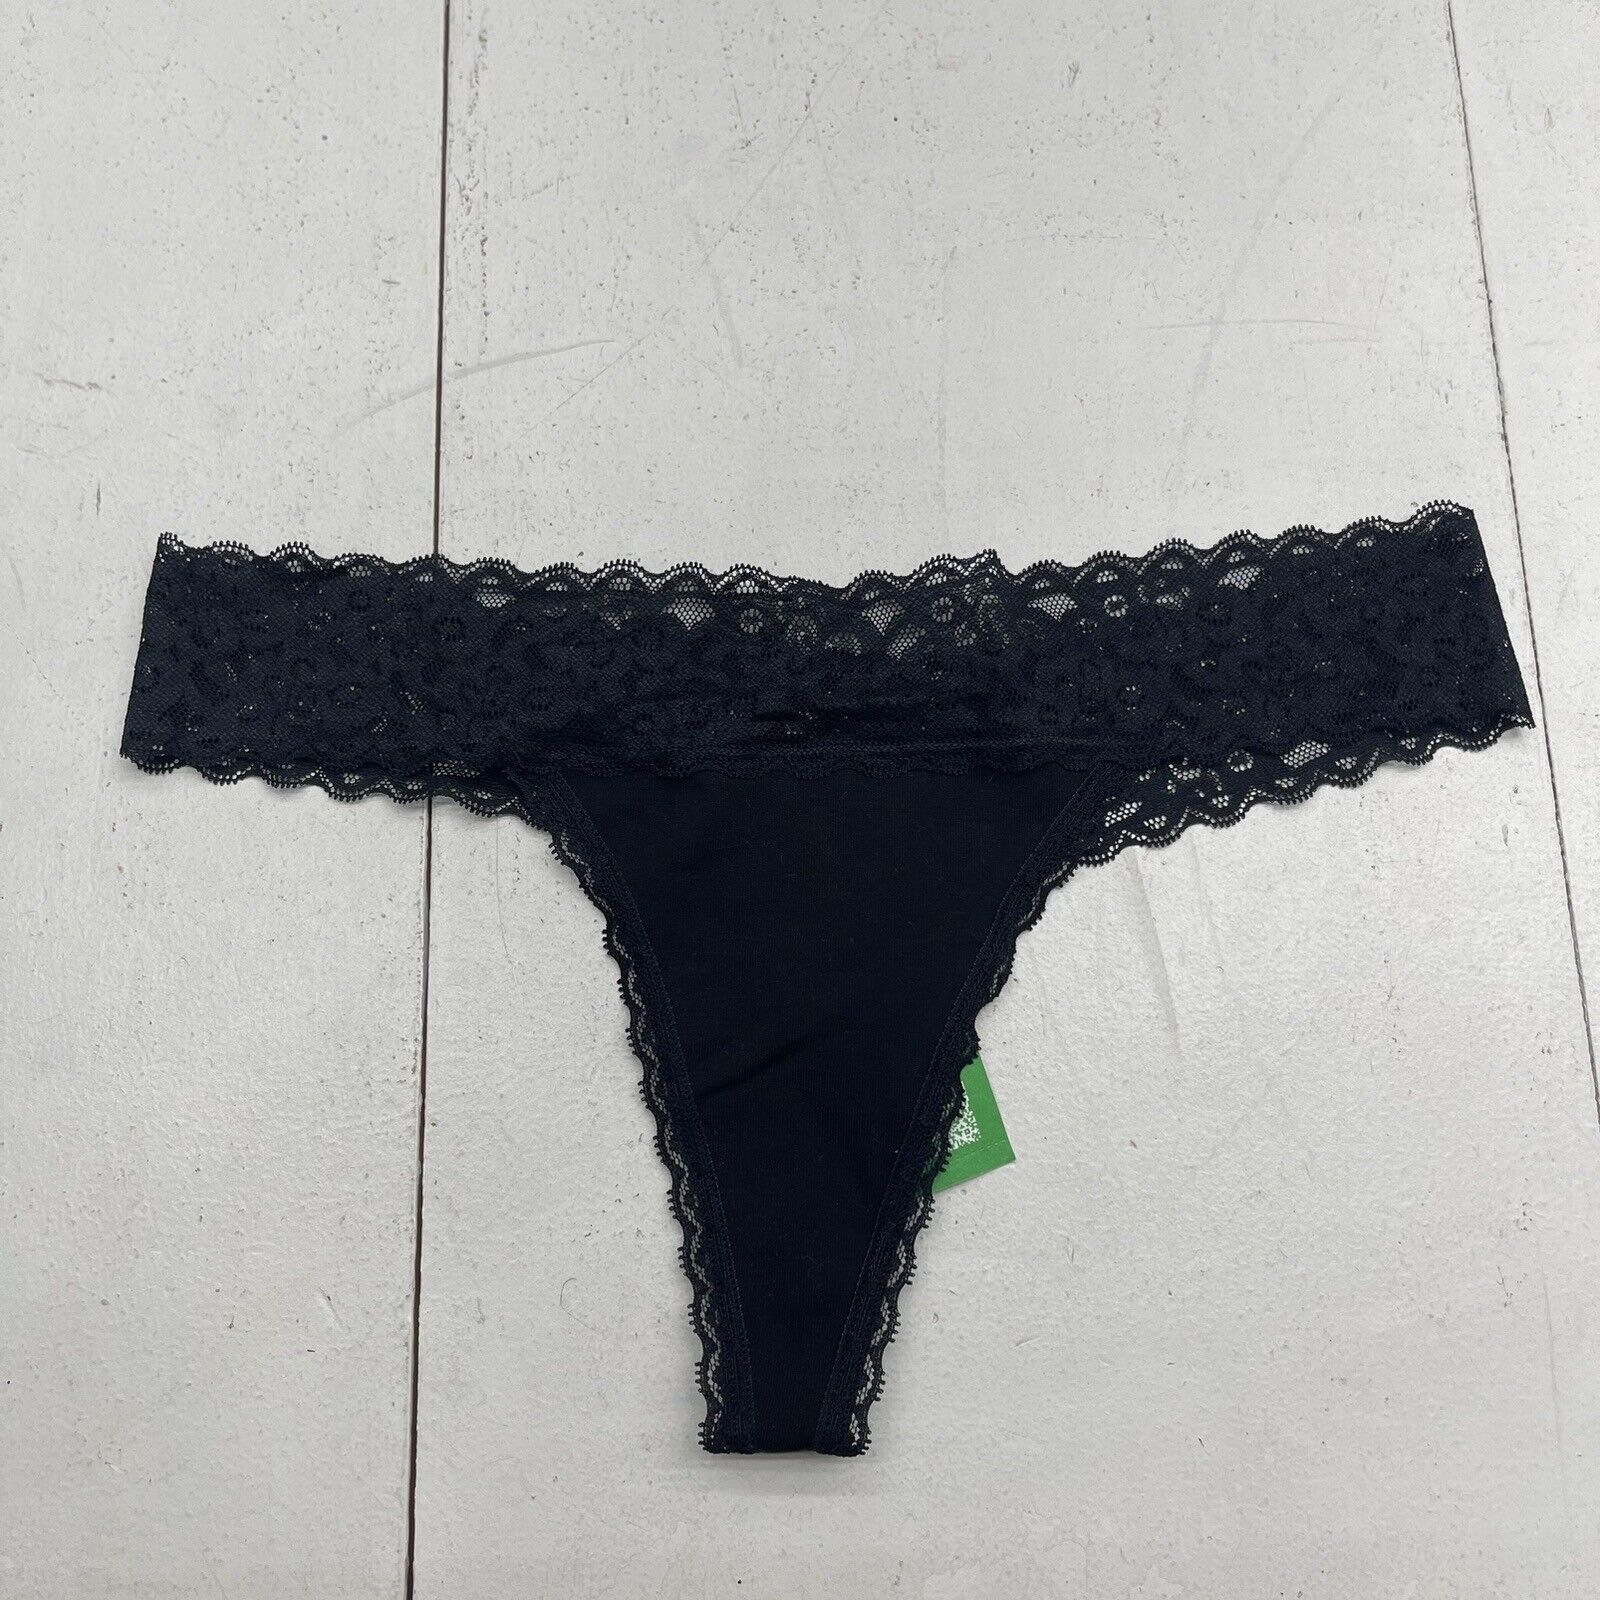 Gap Black Lace Trim Tong Underwear Women's Size Medium New